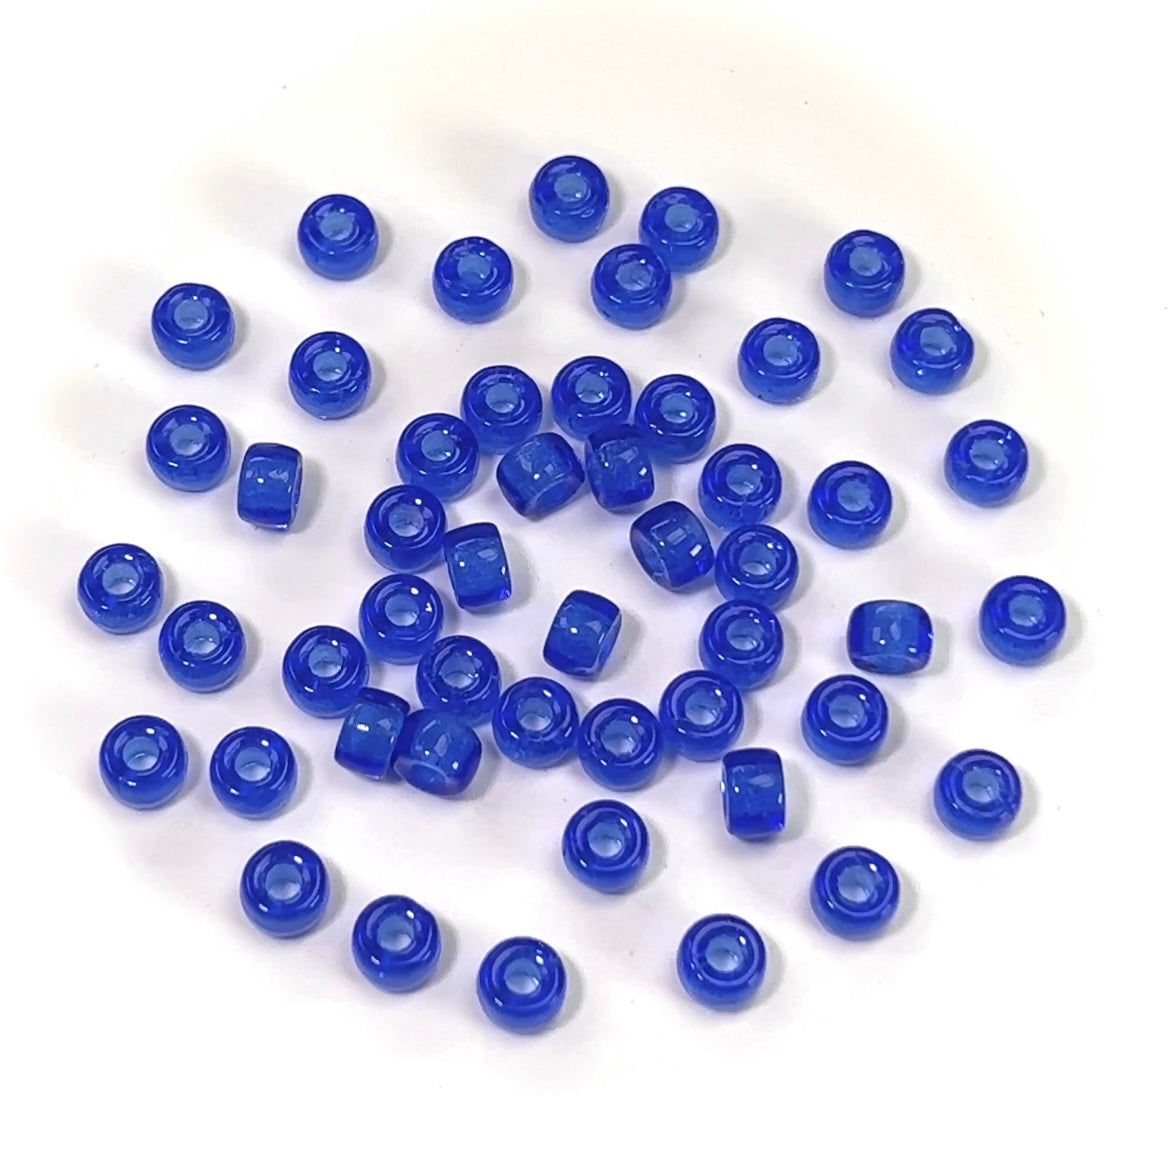 Czech Glass Druk Large Hole Beads in size 6mm, Sapphire blue color, 50pcs, J104